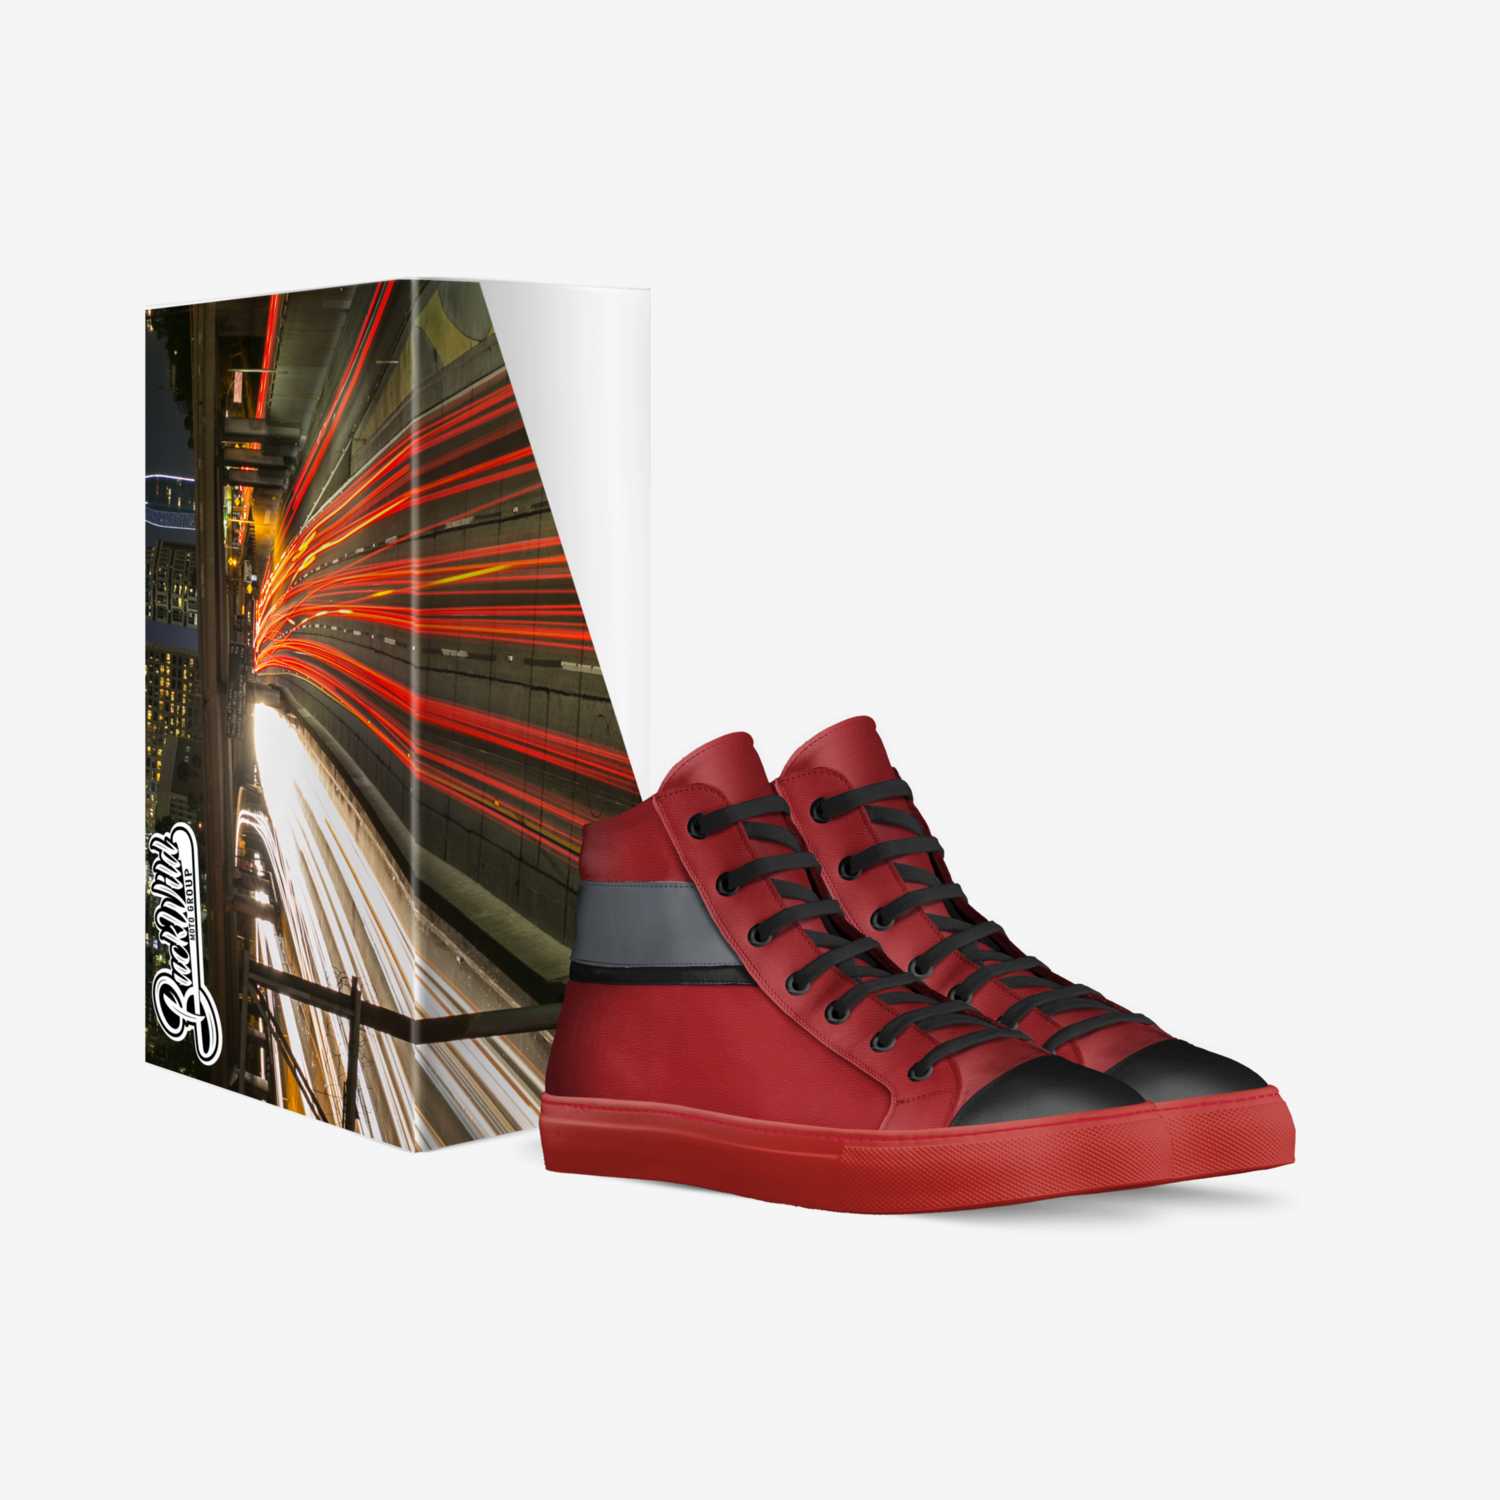 Asphalt Rubies custom made in Italy shoes by Buckwild Moto Group | Box view